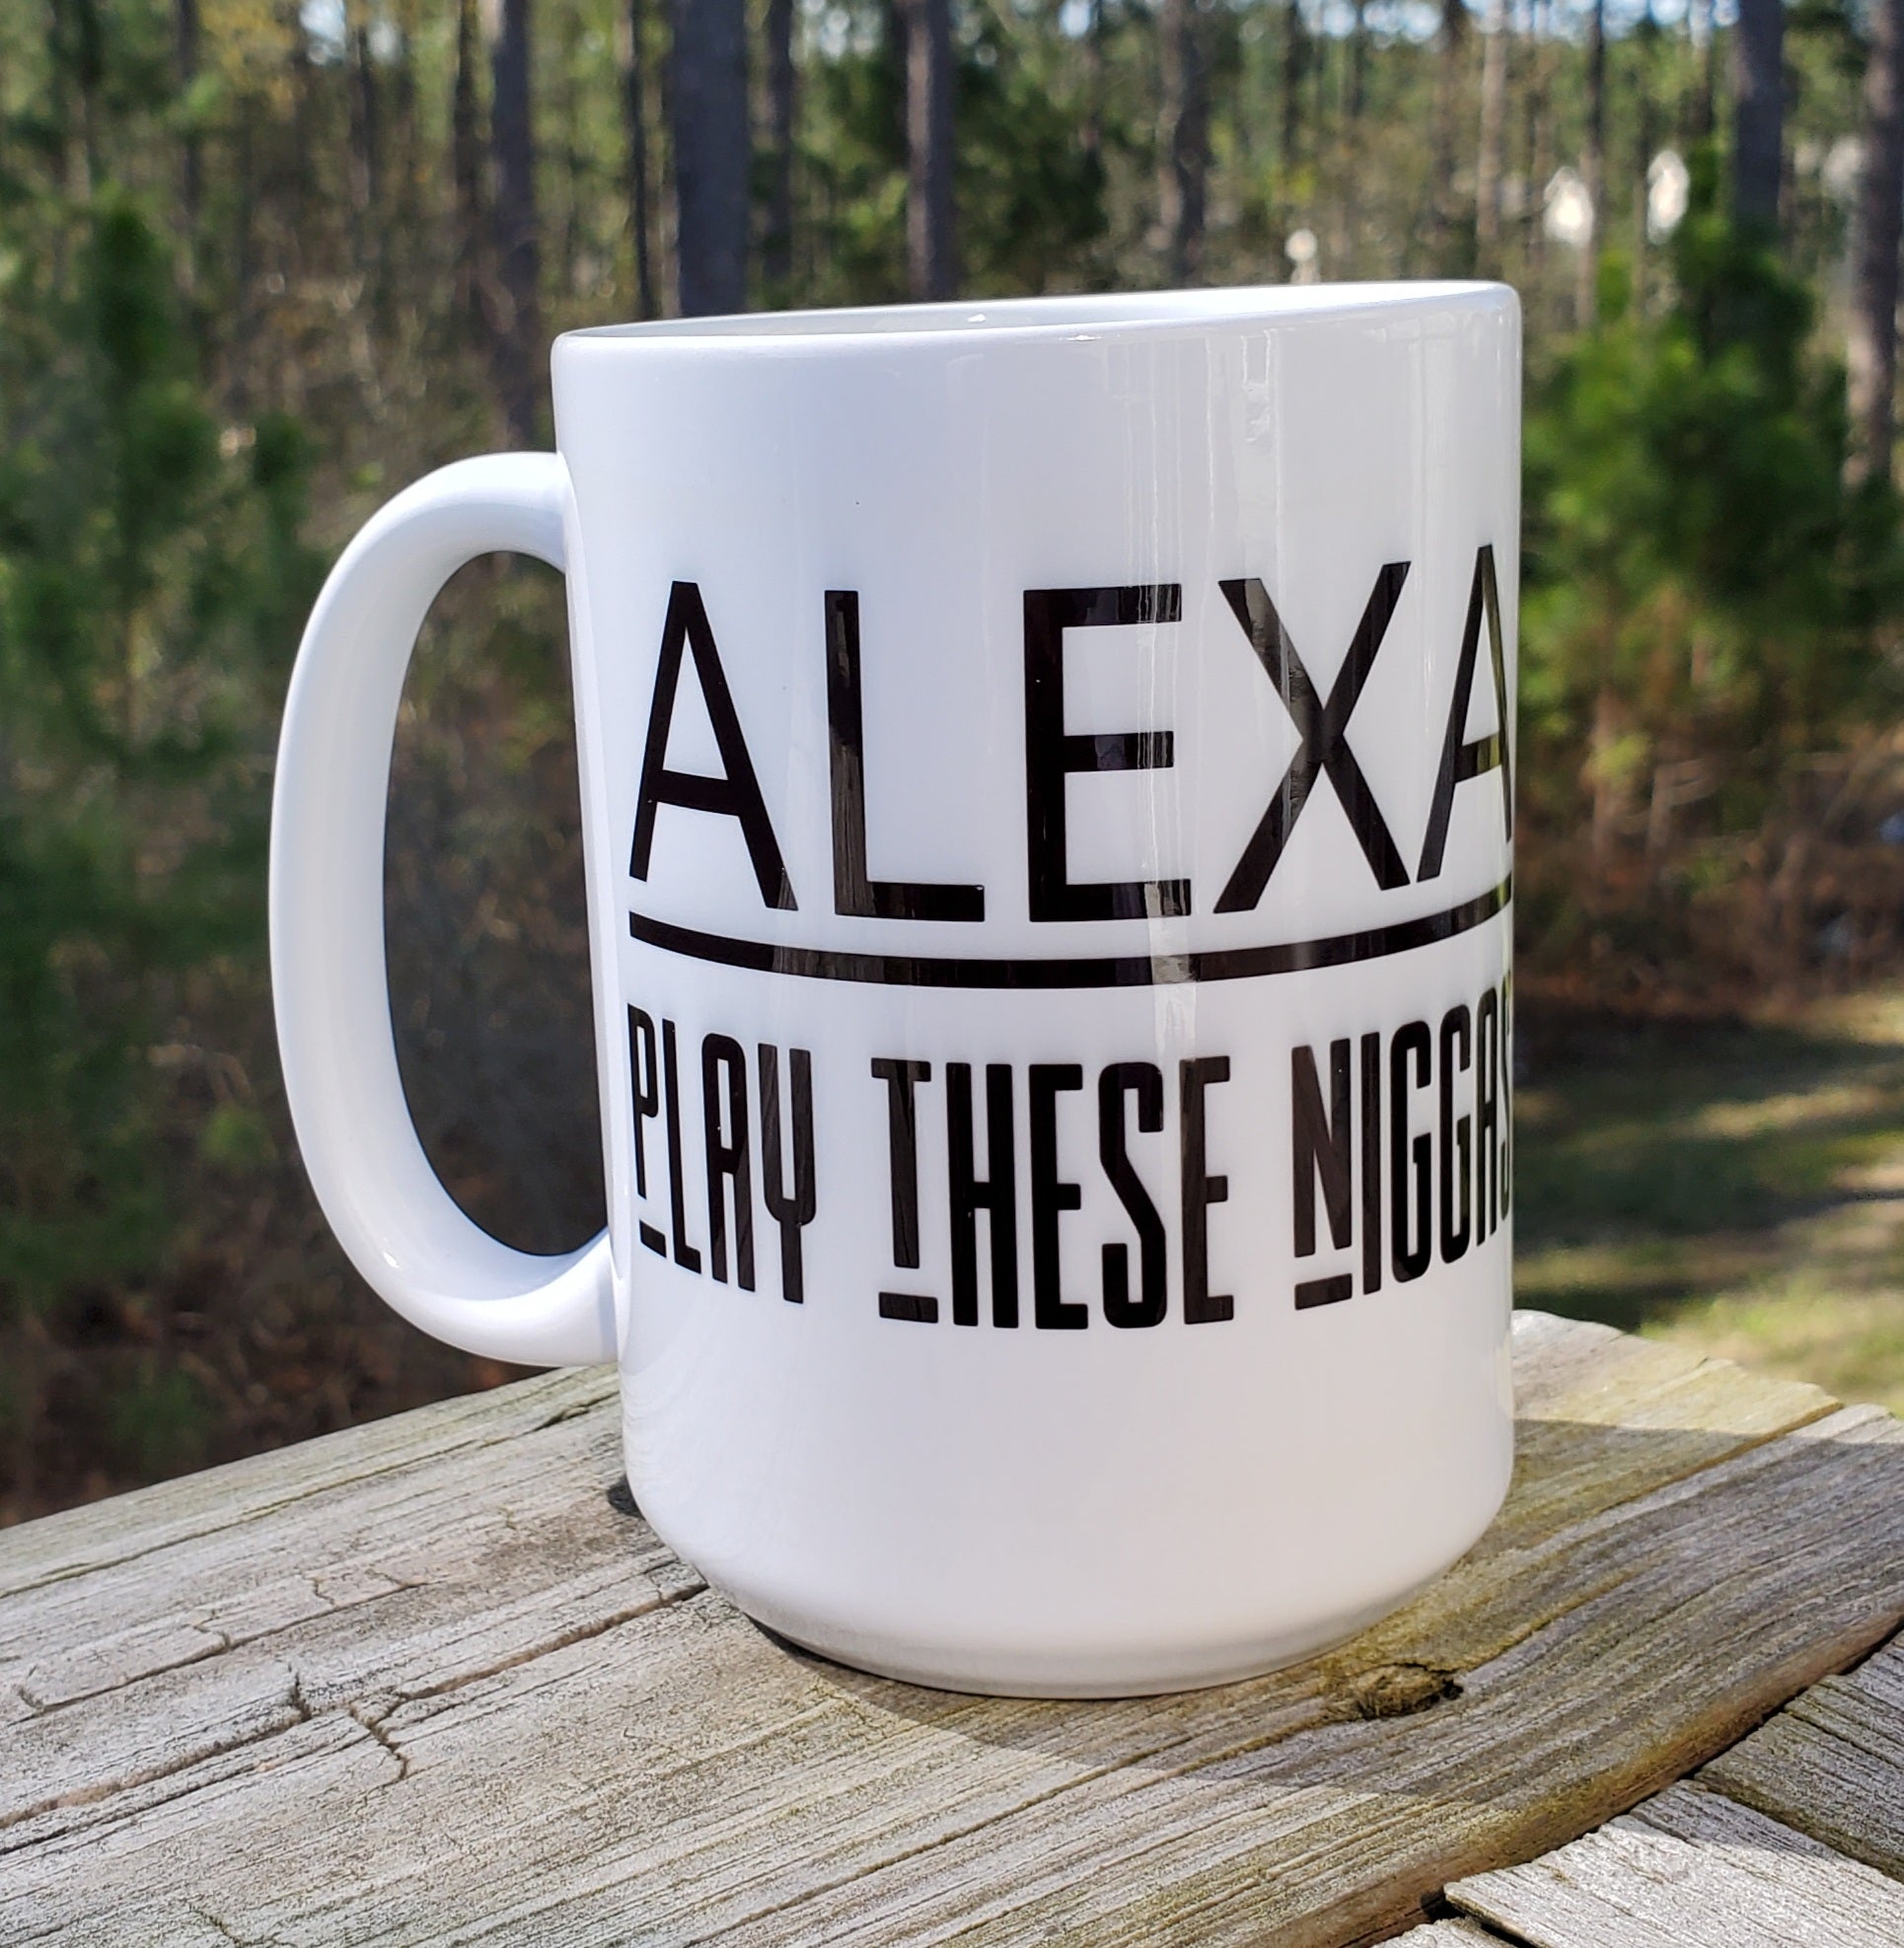 Alexa Play These Niggas Mug